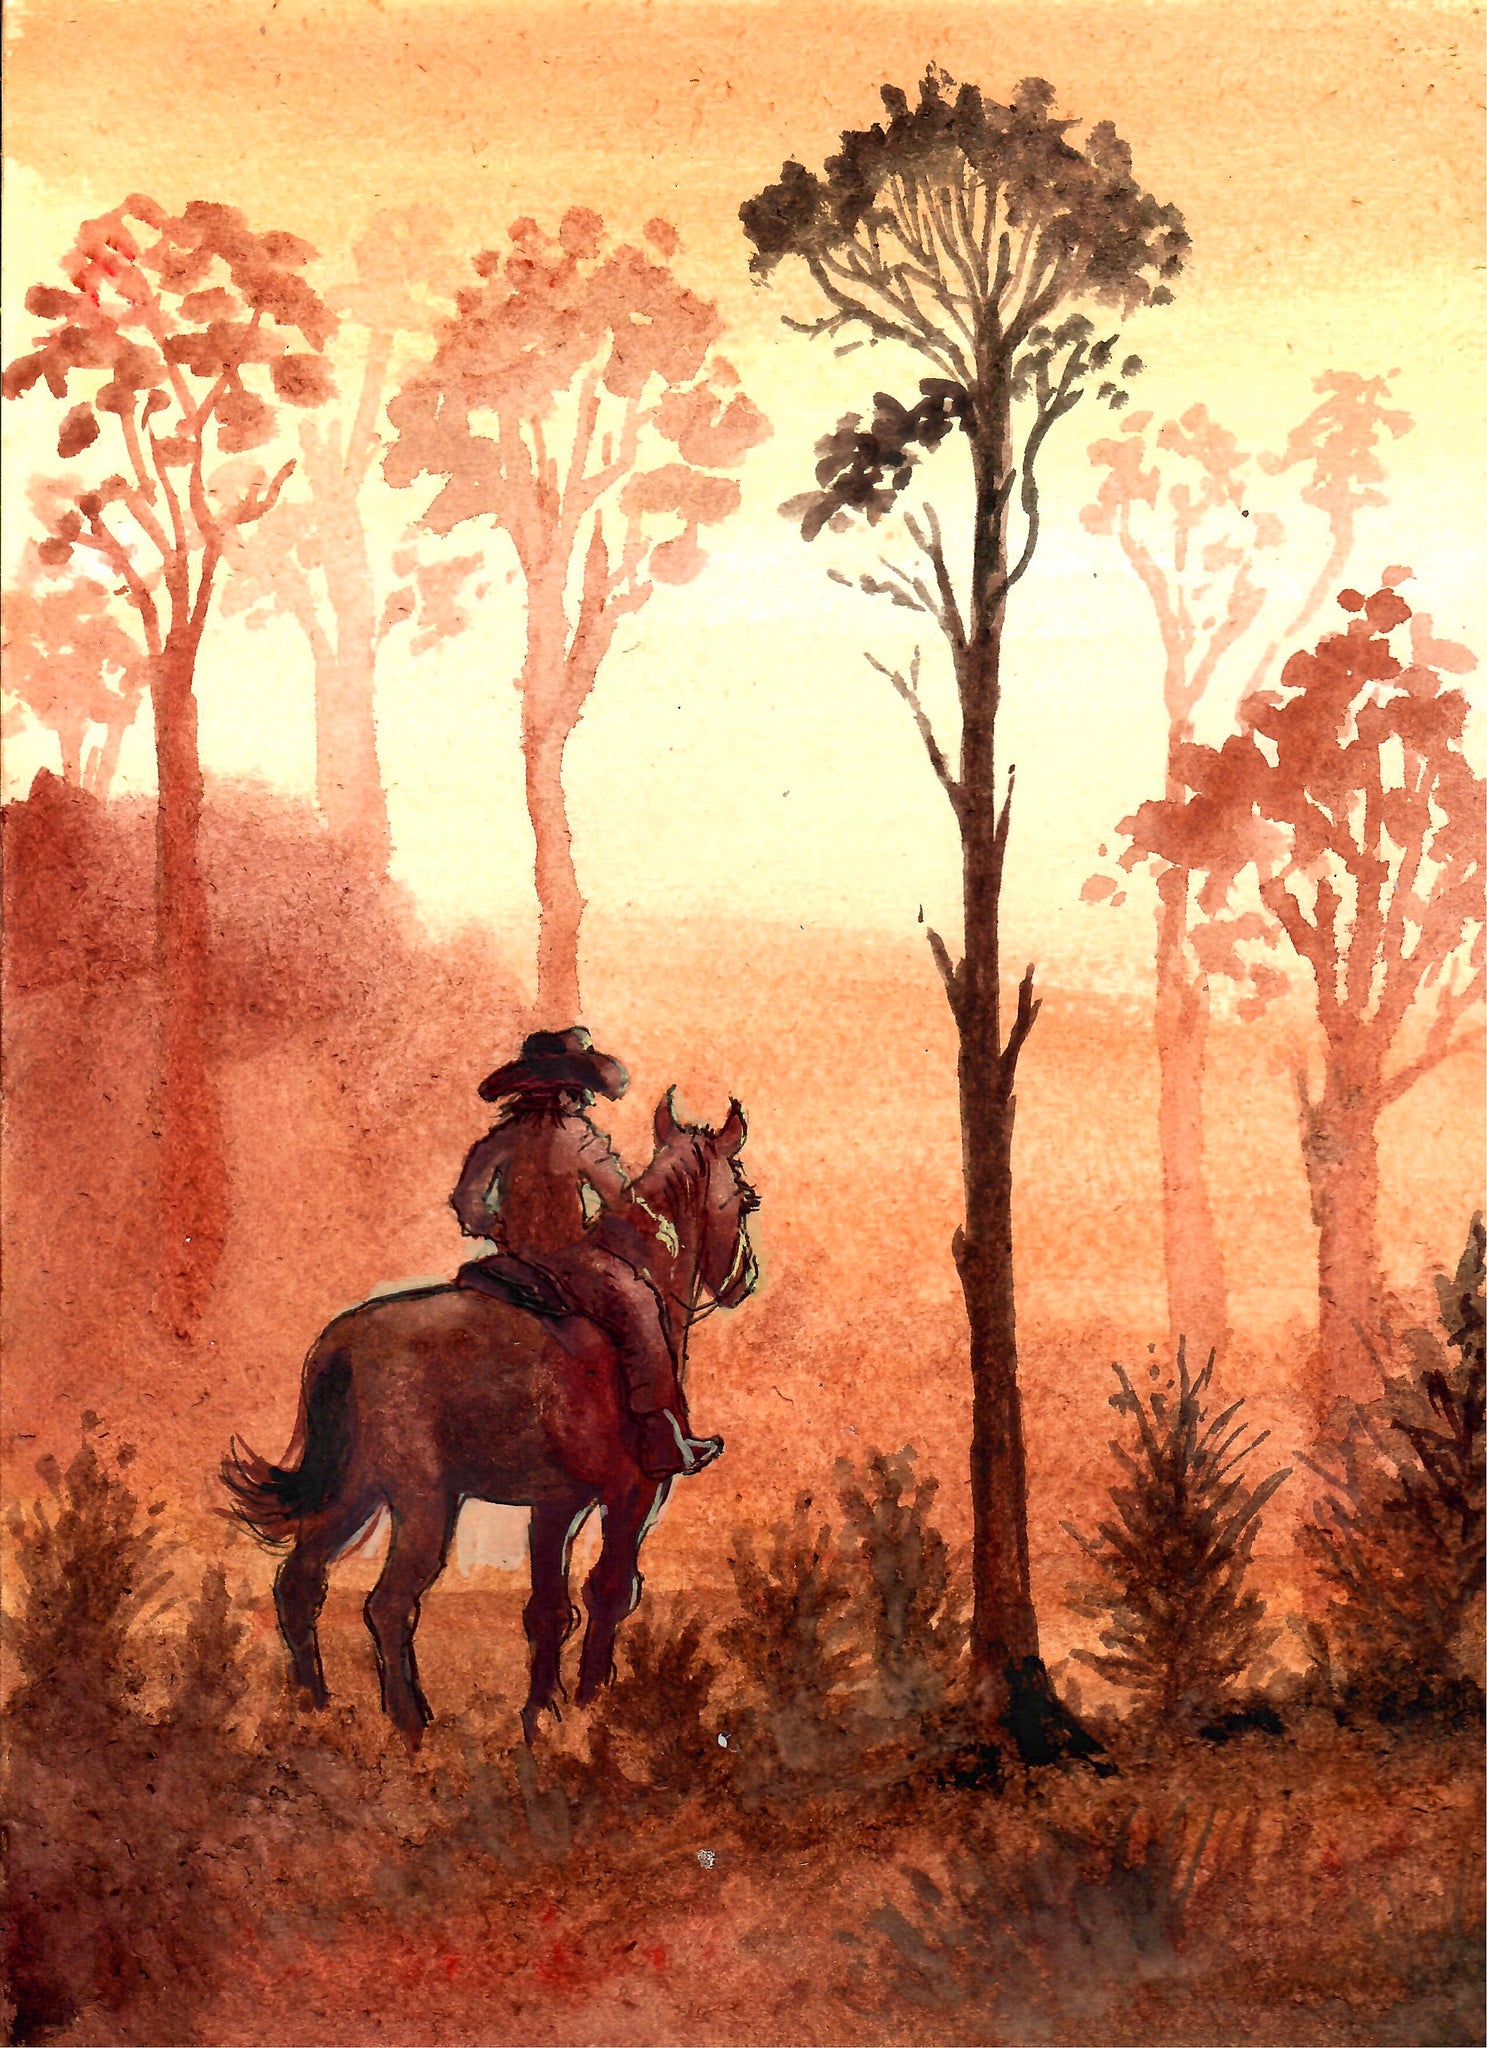 Western - Cowboy Riding Among Tall Trees, Cowboy Art, Western Art, Monotone Watercolor